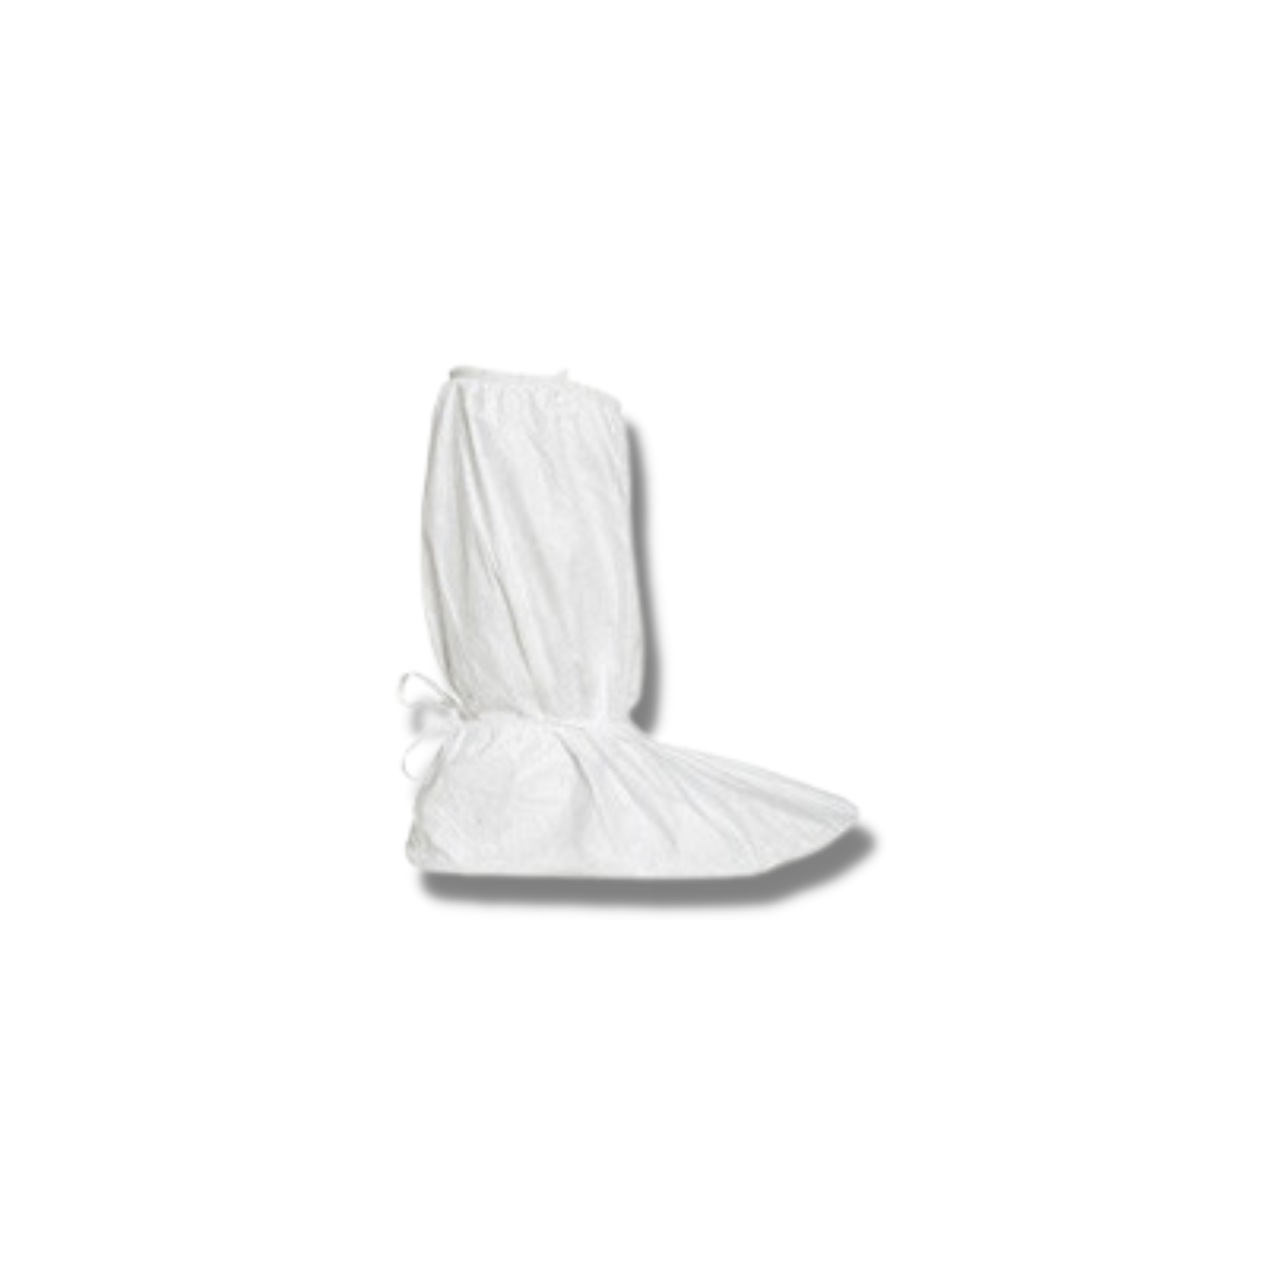 Cleanroom Boot Covers  Tyvek Boot Covers, #IC458B-CS